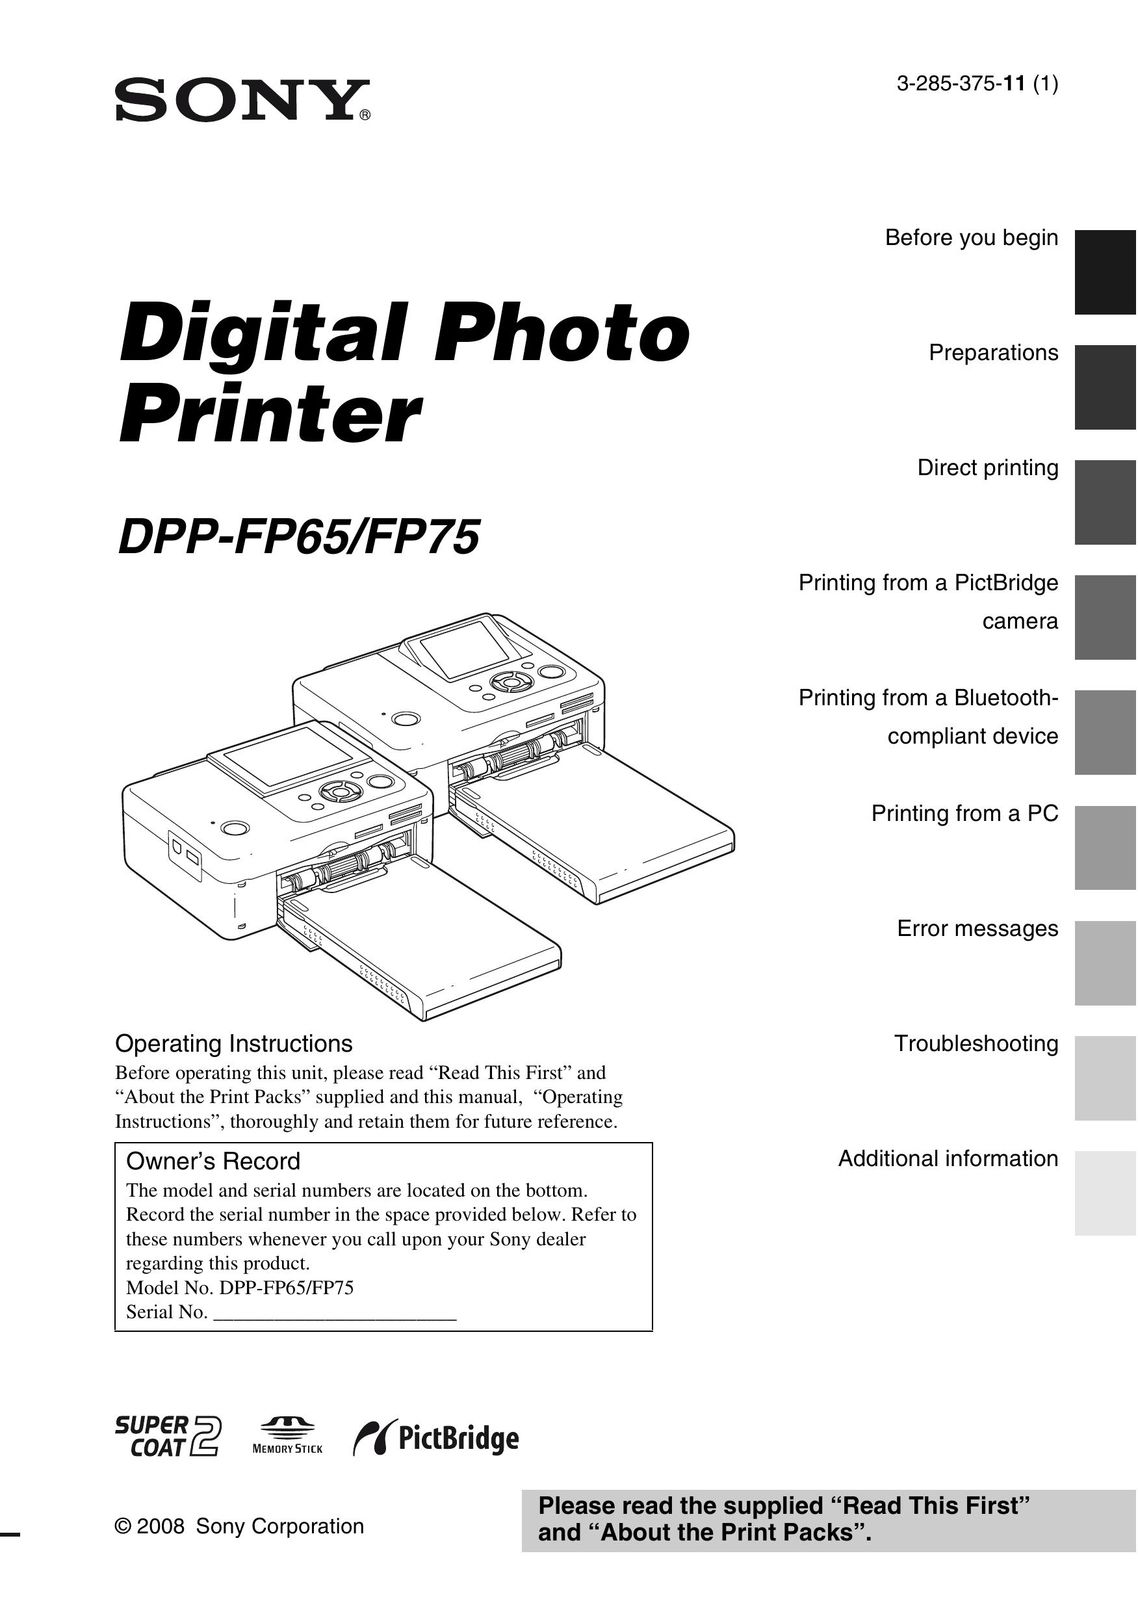 Sony DPPFP75 Printer User Manual